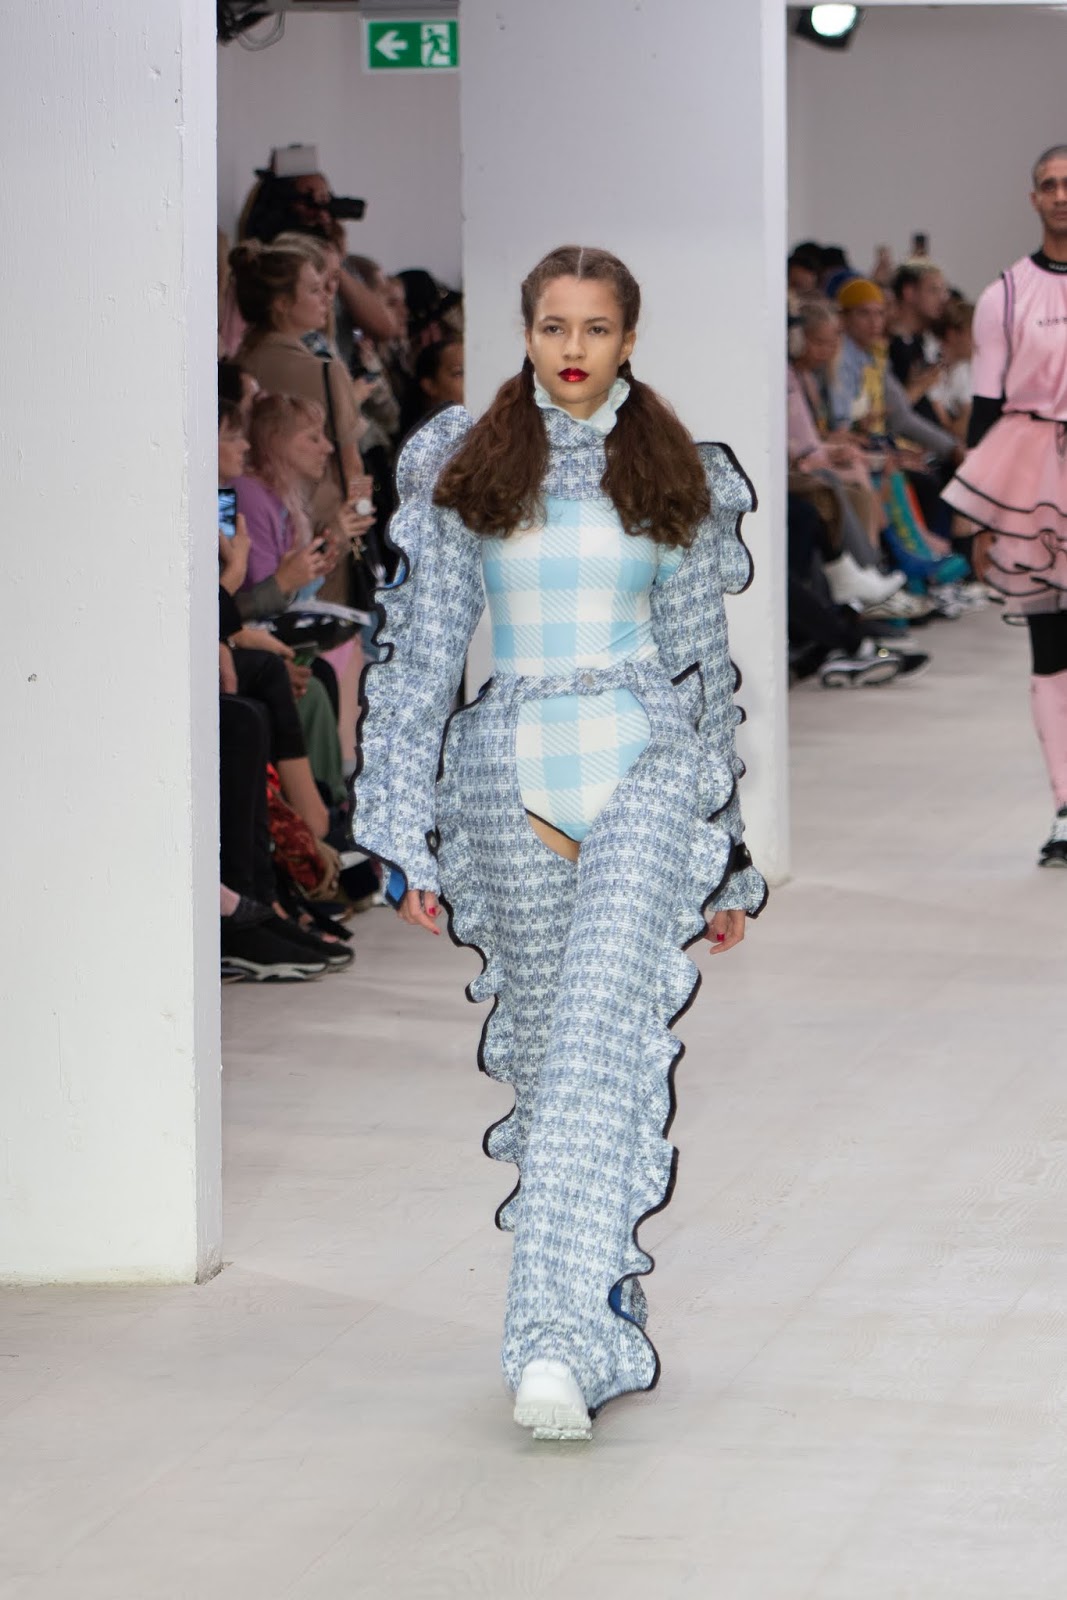 Louis Vuitton 3D Monogram Stripe Accent Pajama Shirt, Grey, 42